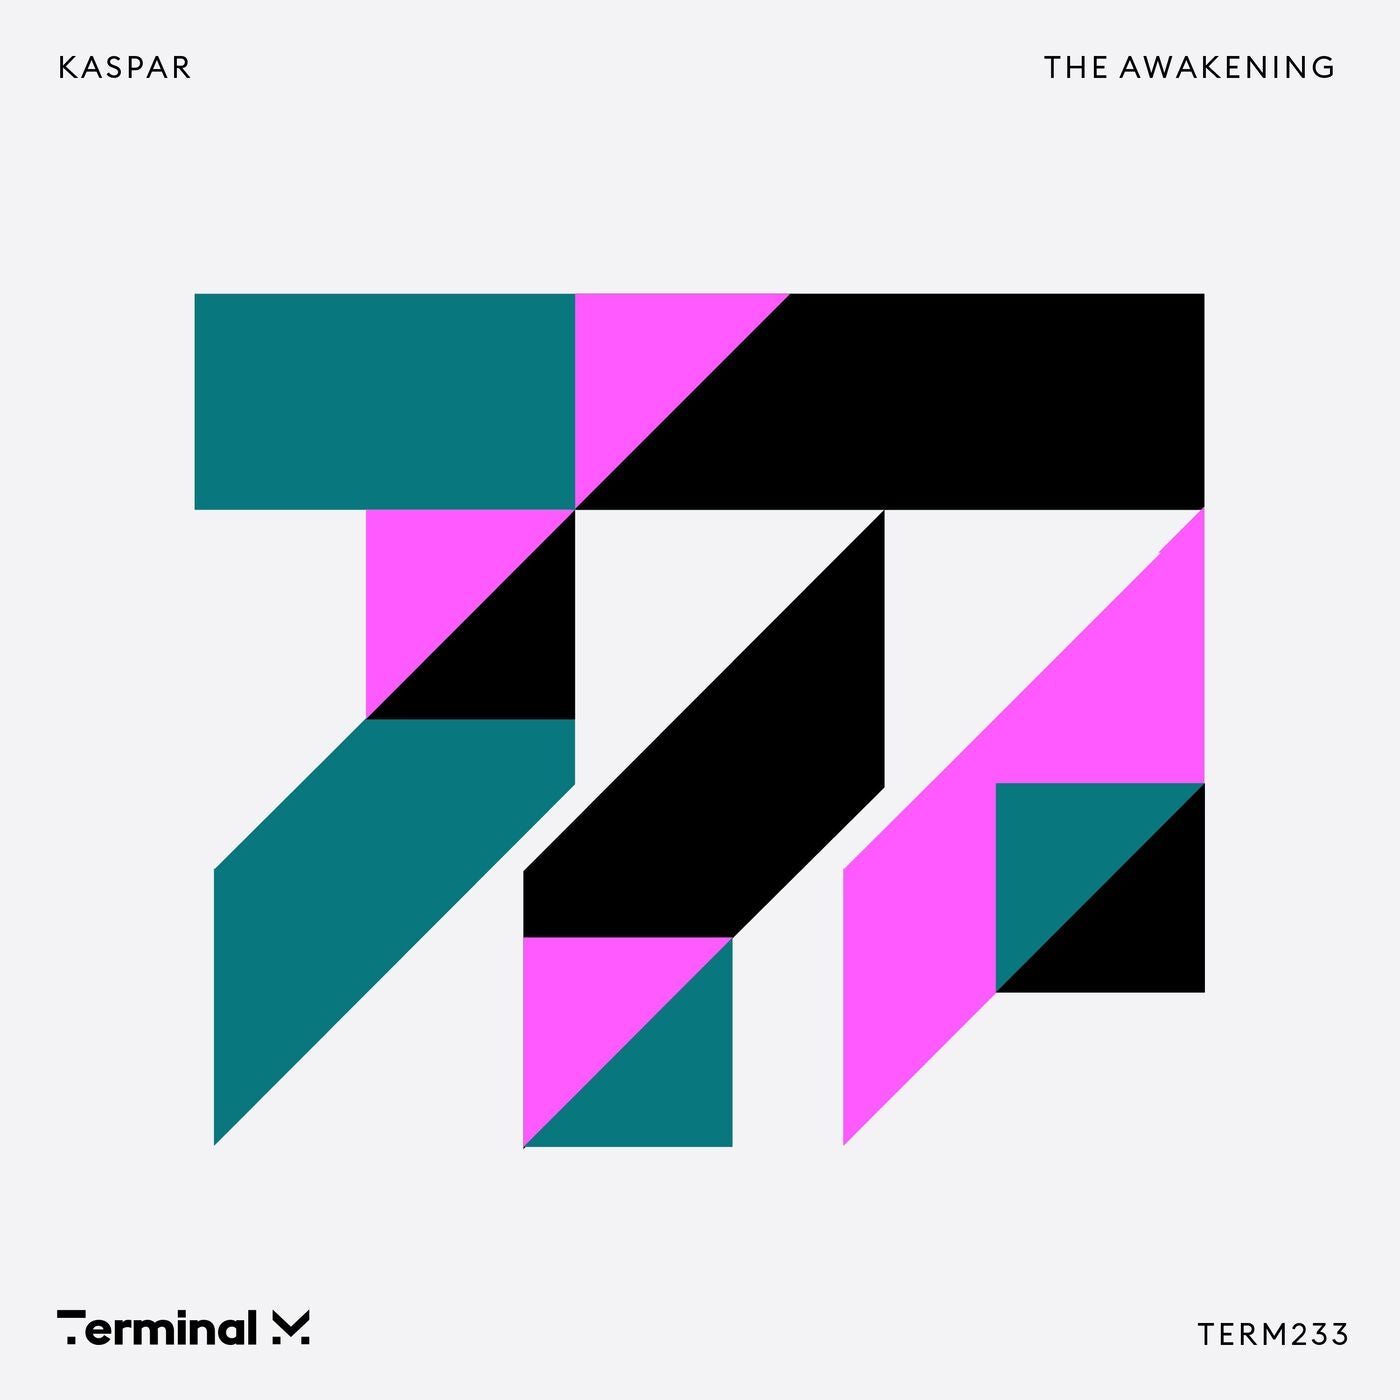 image cover: Kaspar (DE) - The Awakening on Terminal M